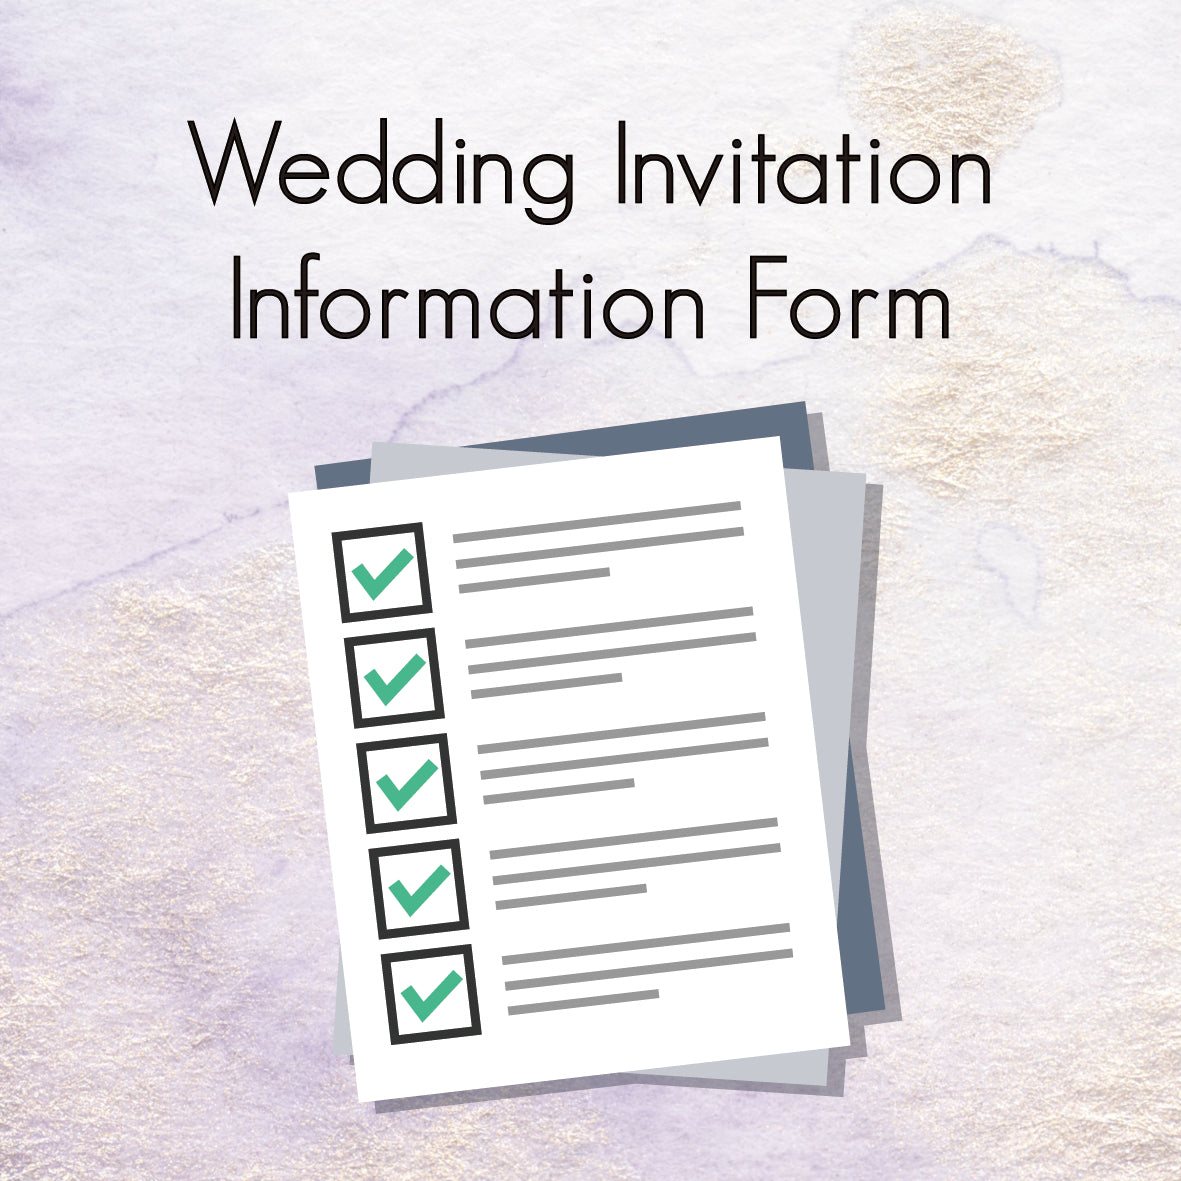 WEDDING INVITATION INFORMATION FORM - Wforwedding